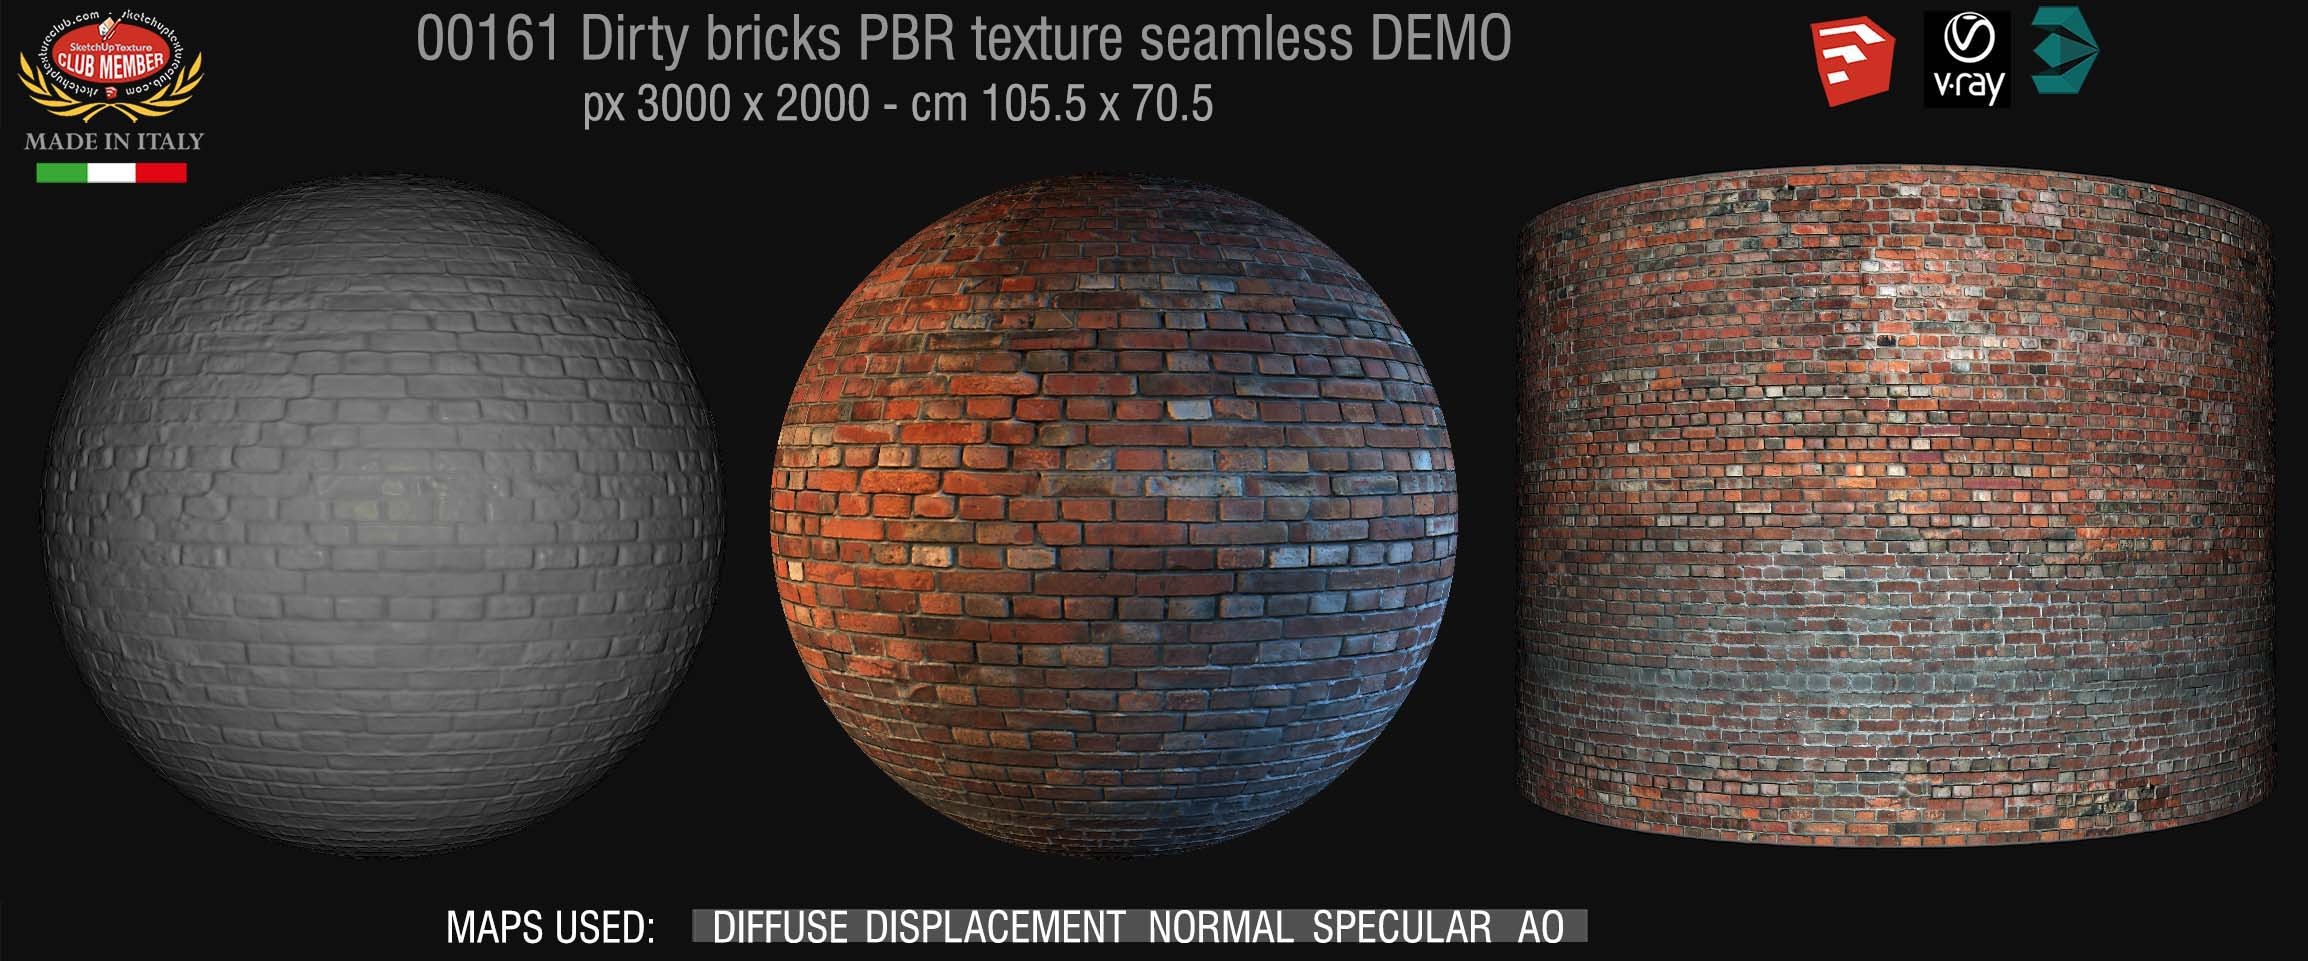 00161 Dirty bricks PBR texture seamless DEMO